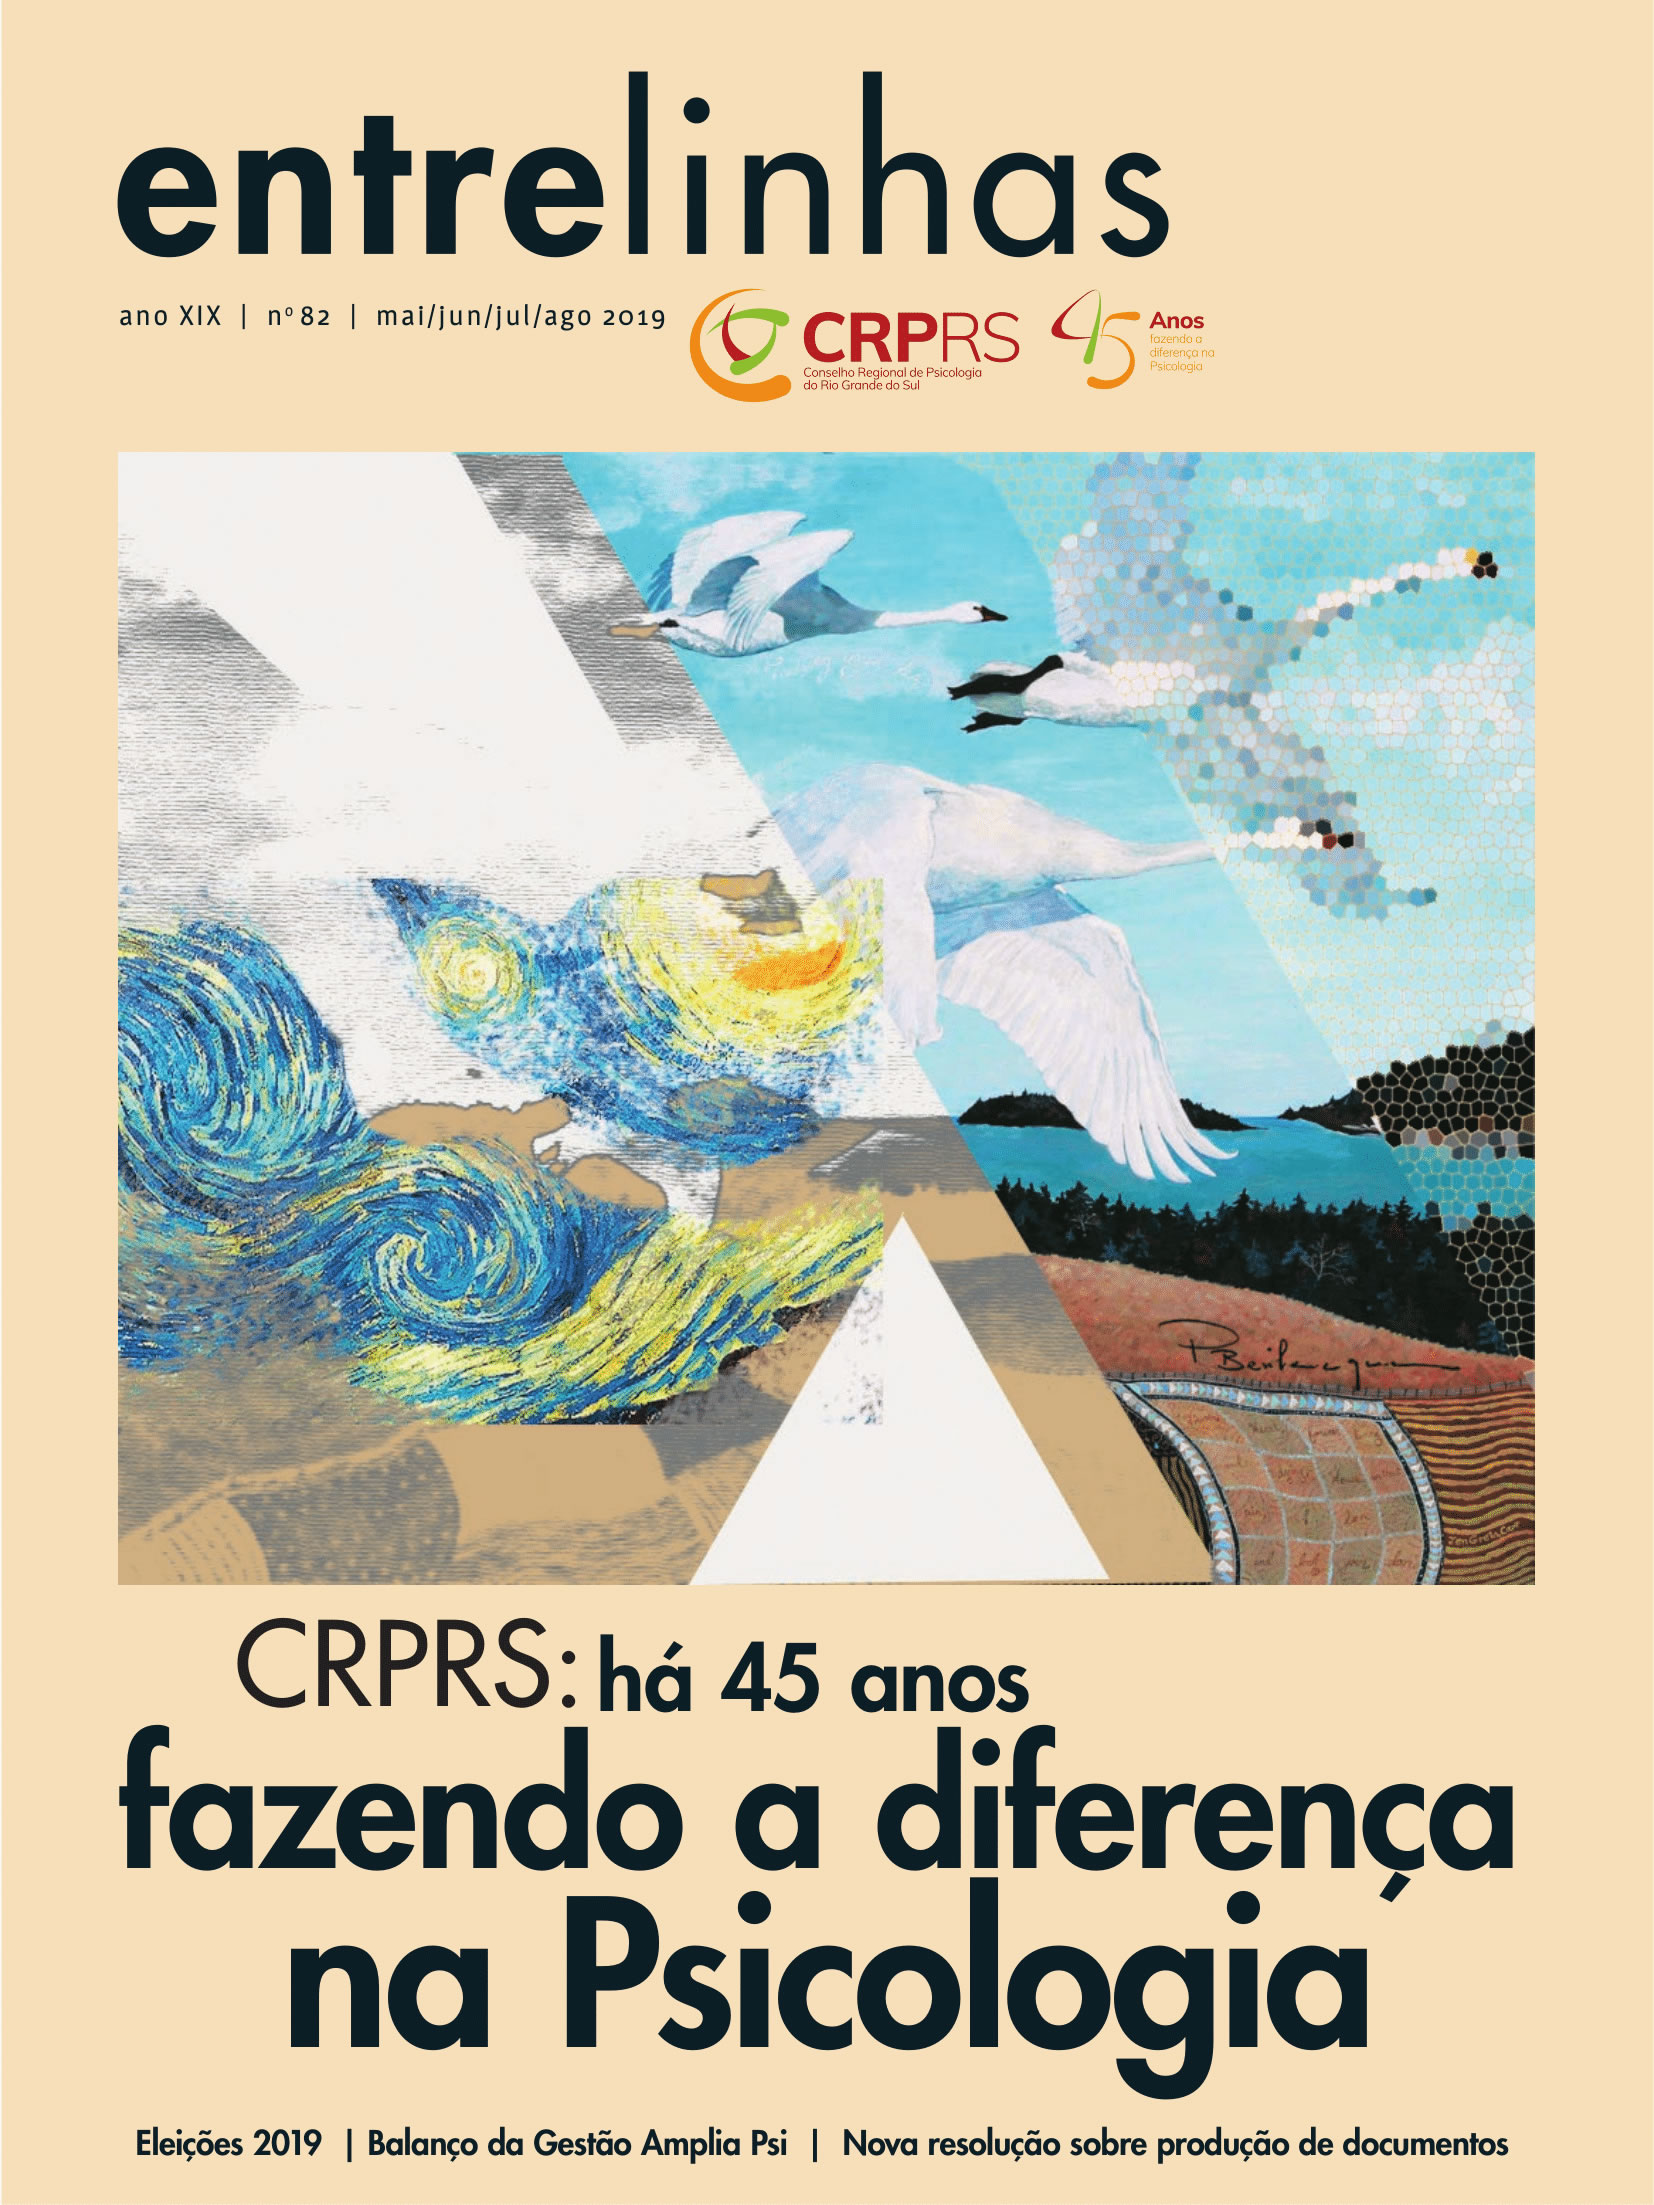 CRPRS: há 45 anos fazendo a diferença na Psicologia